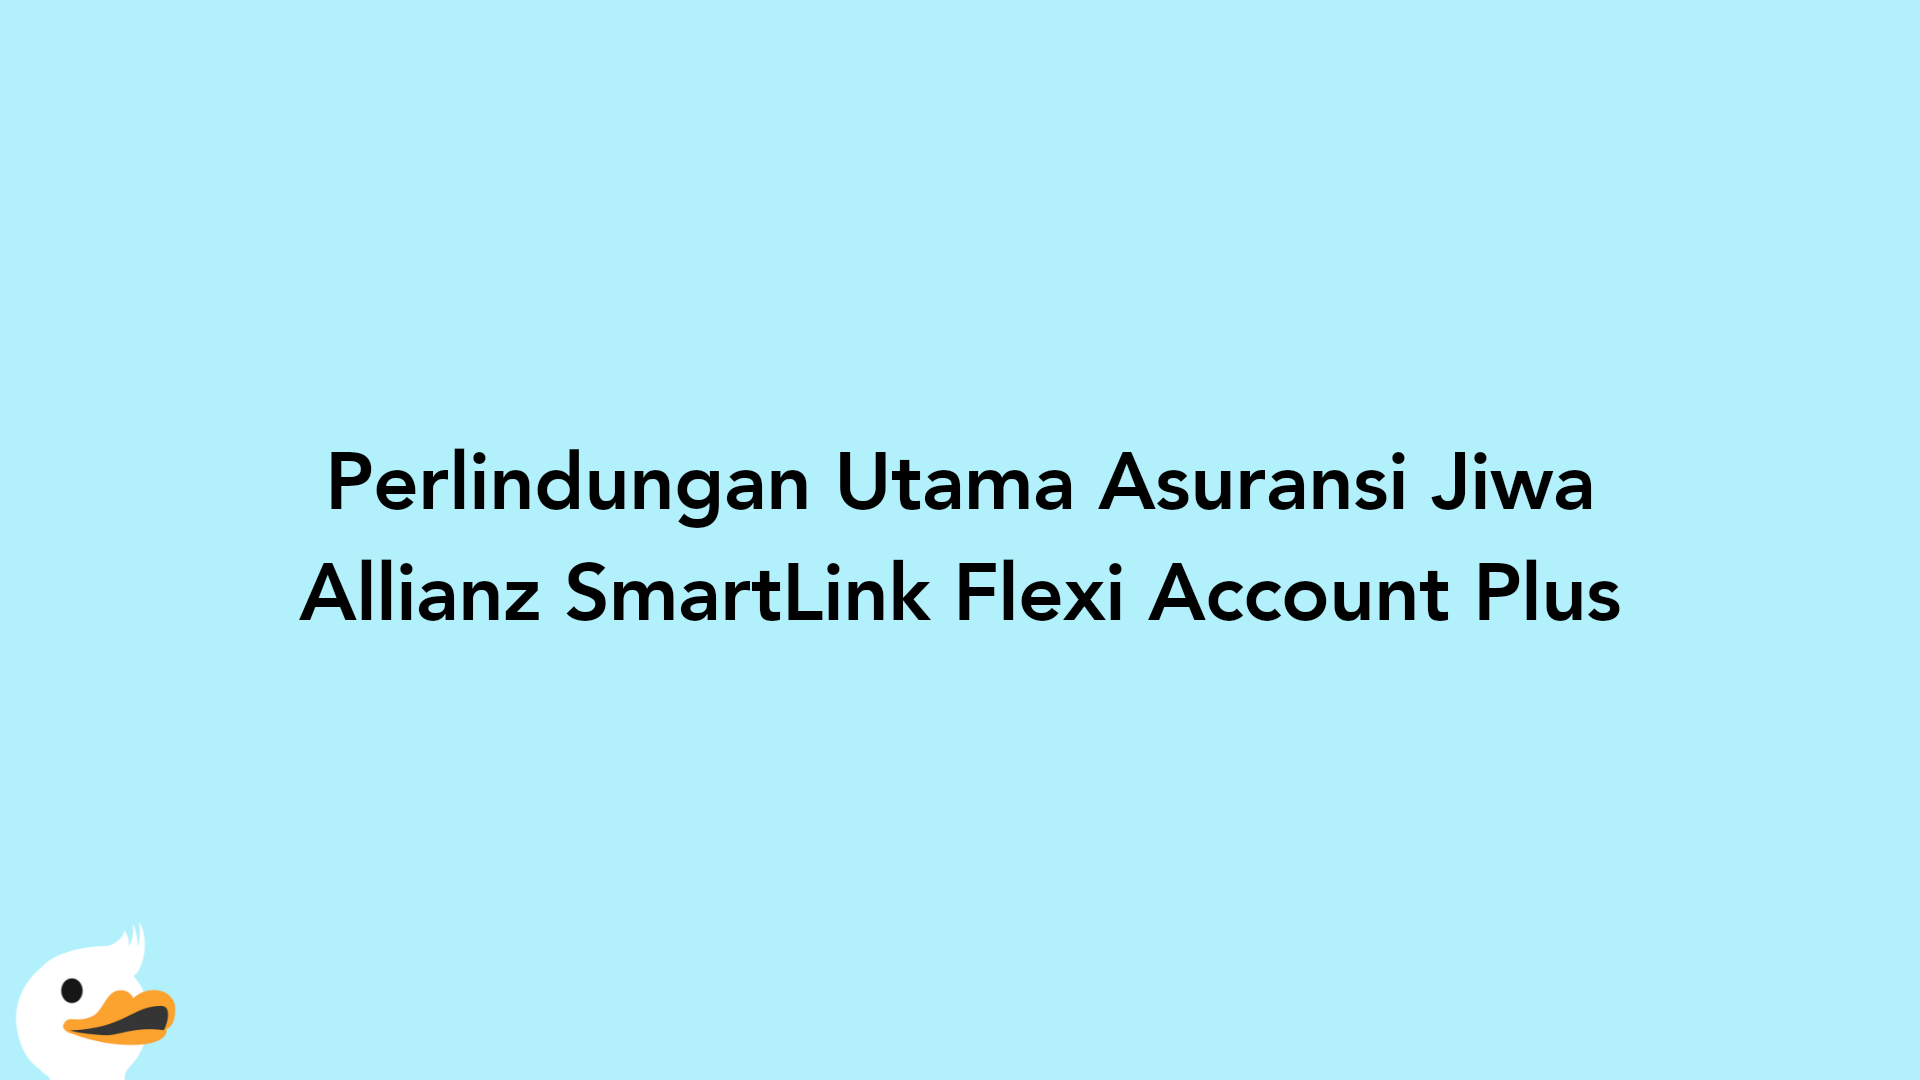 Perlindungan Utama Asuransi Jiwa Allianz SmartLink Flexi Account Plus